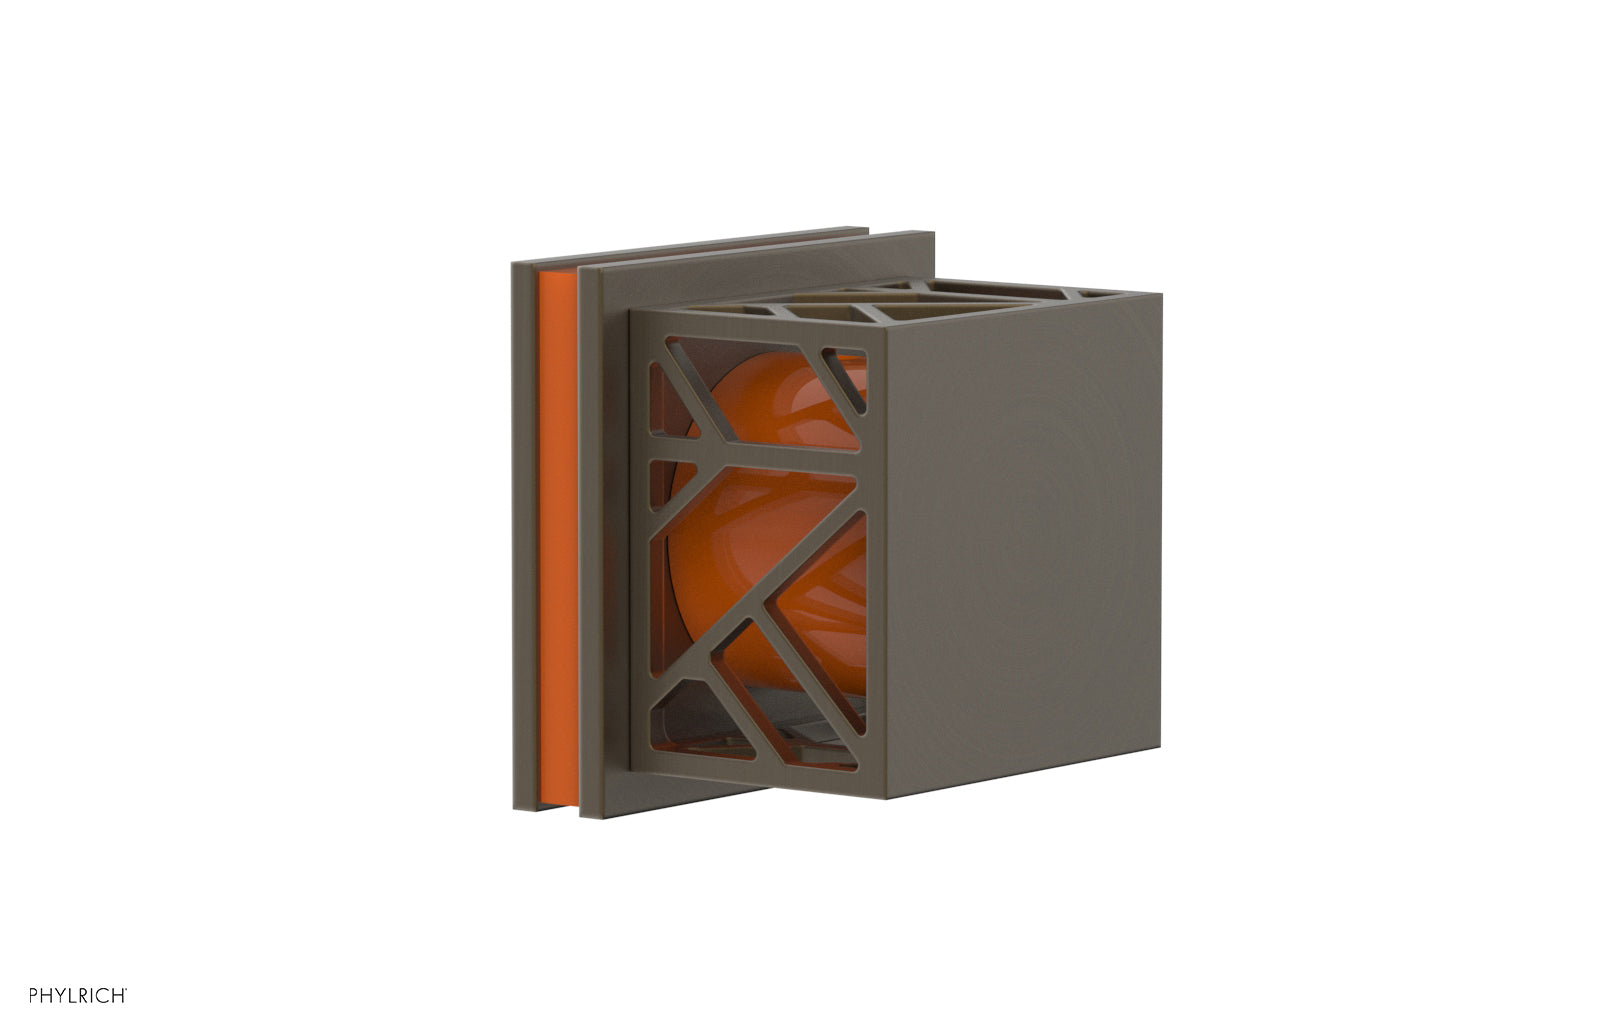 Phylrich JOLIE Volume Control/Diverter Trim - Square Handle with "Orange" Accents